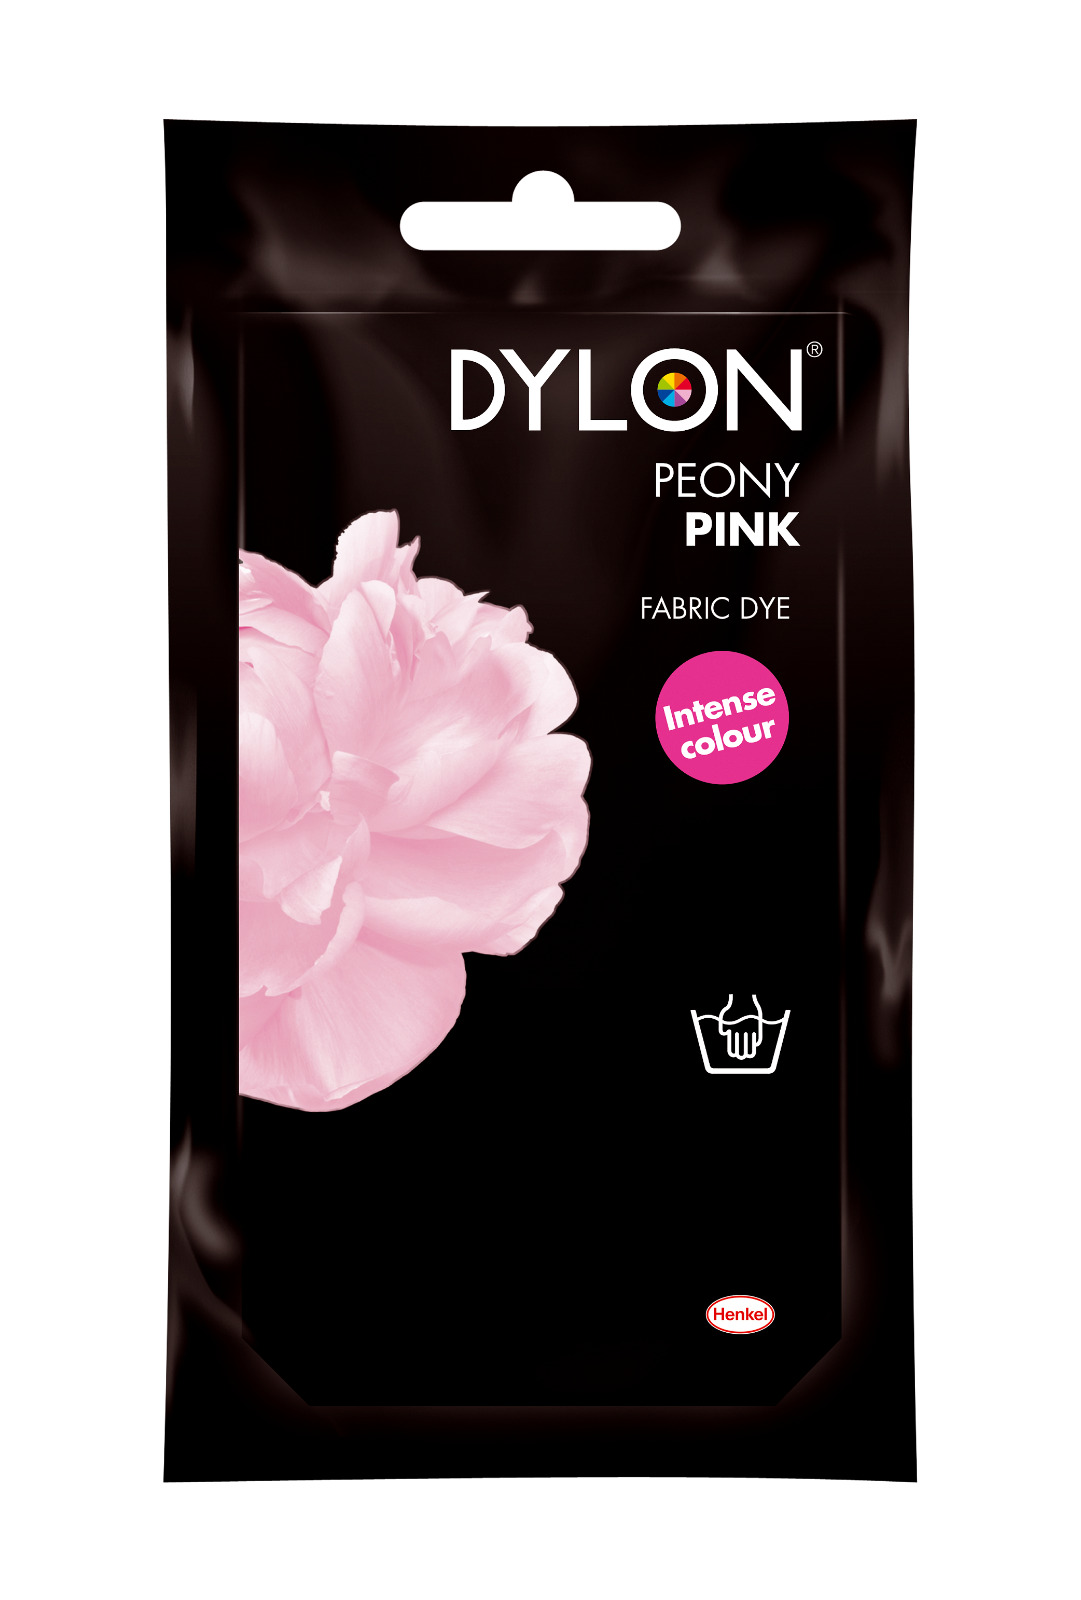 DYLON Hand Dye 50g Dye for Fabric Clothes Jeans Textile Cotton Wool Silk  Linen